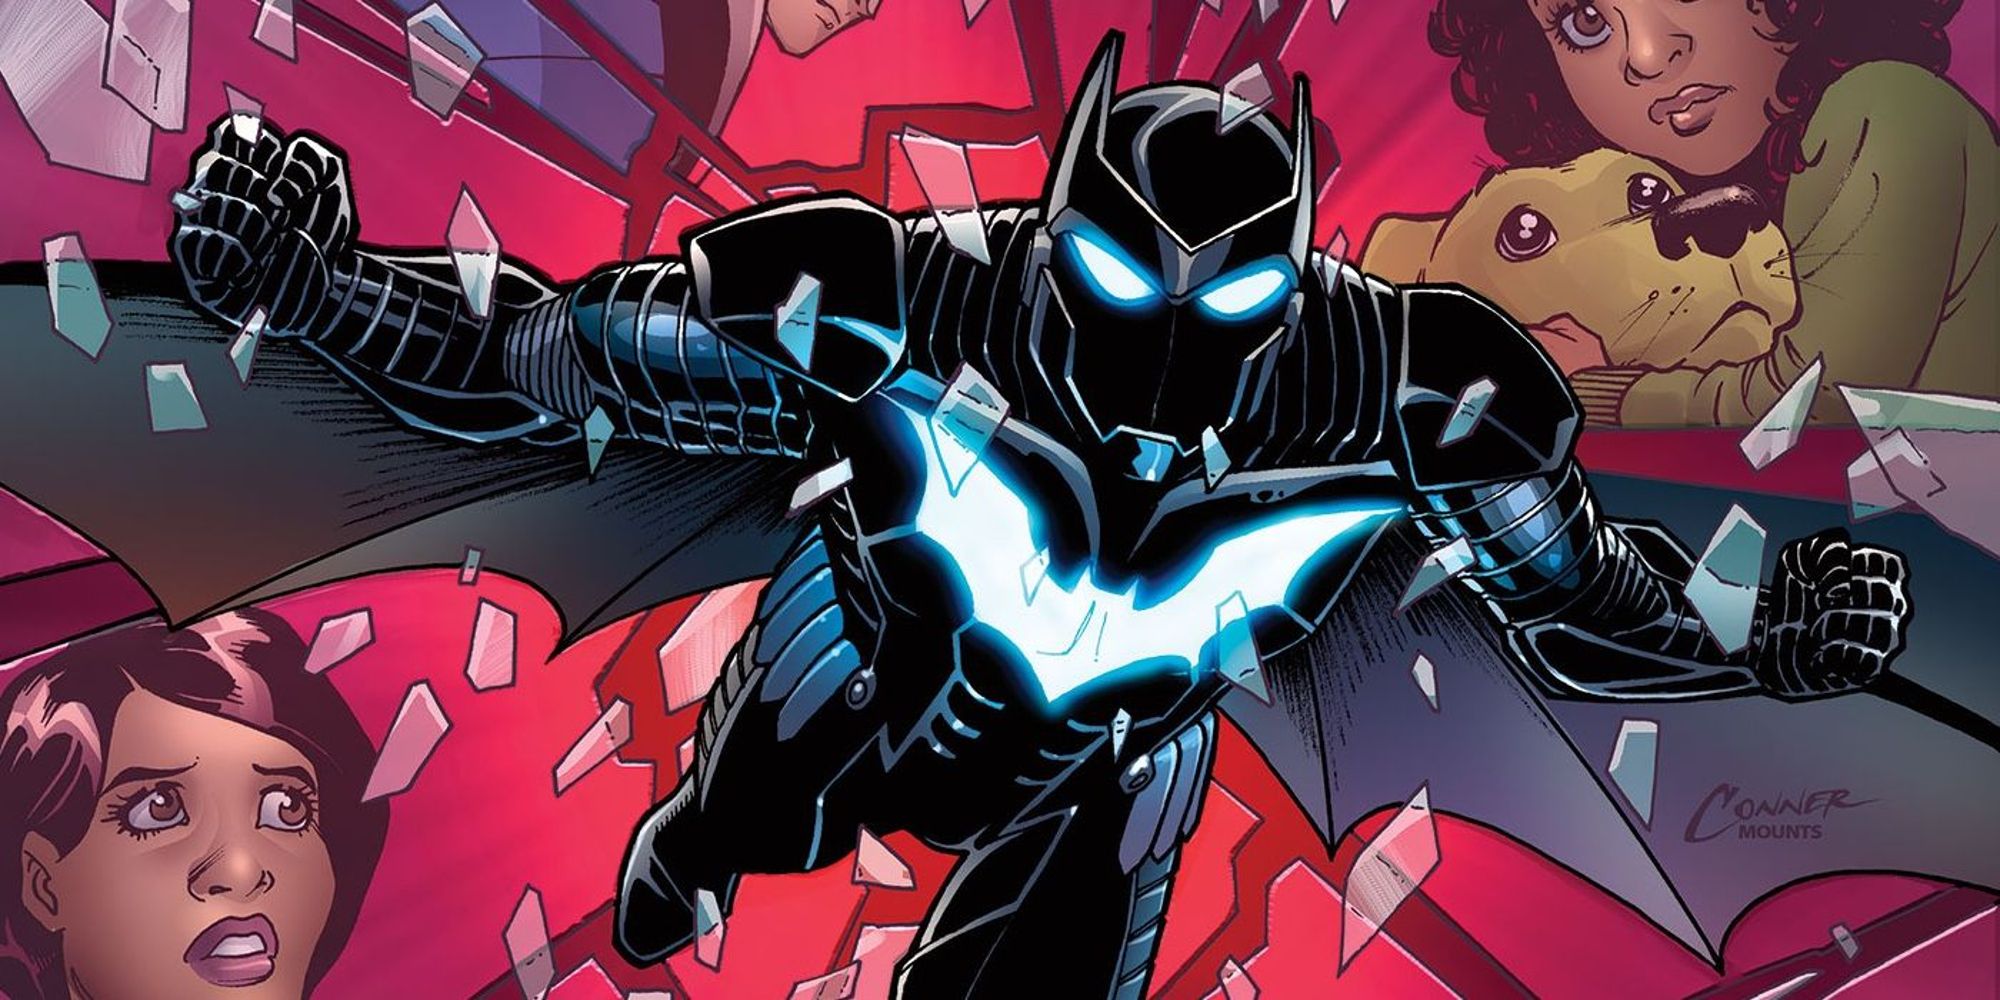 Luke Fox AKA Batwing crashing through glass in cover artwork for DC comics